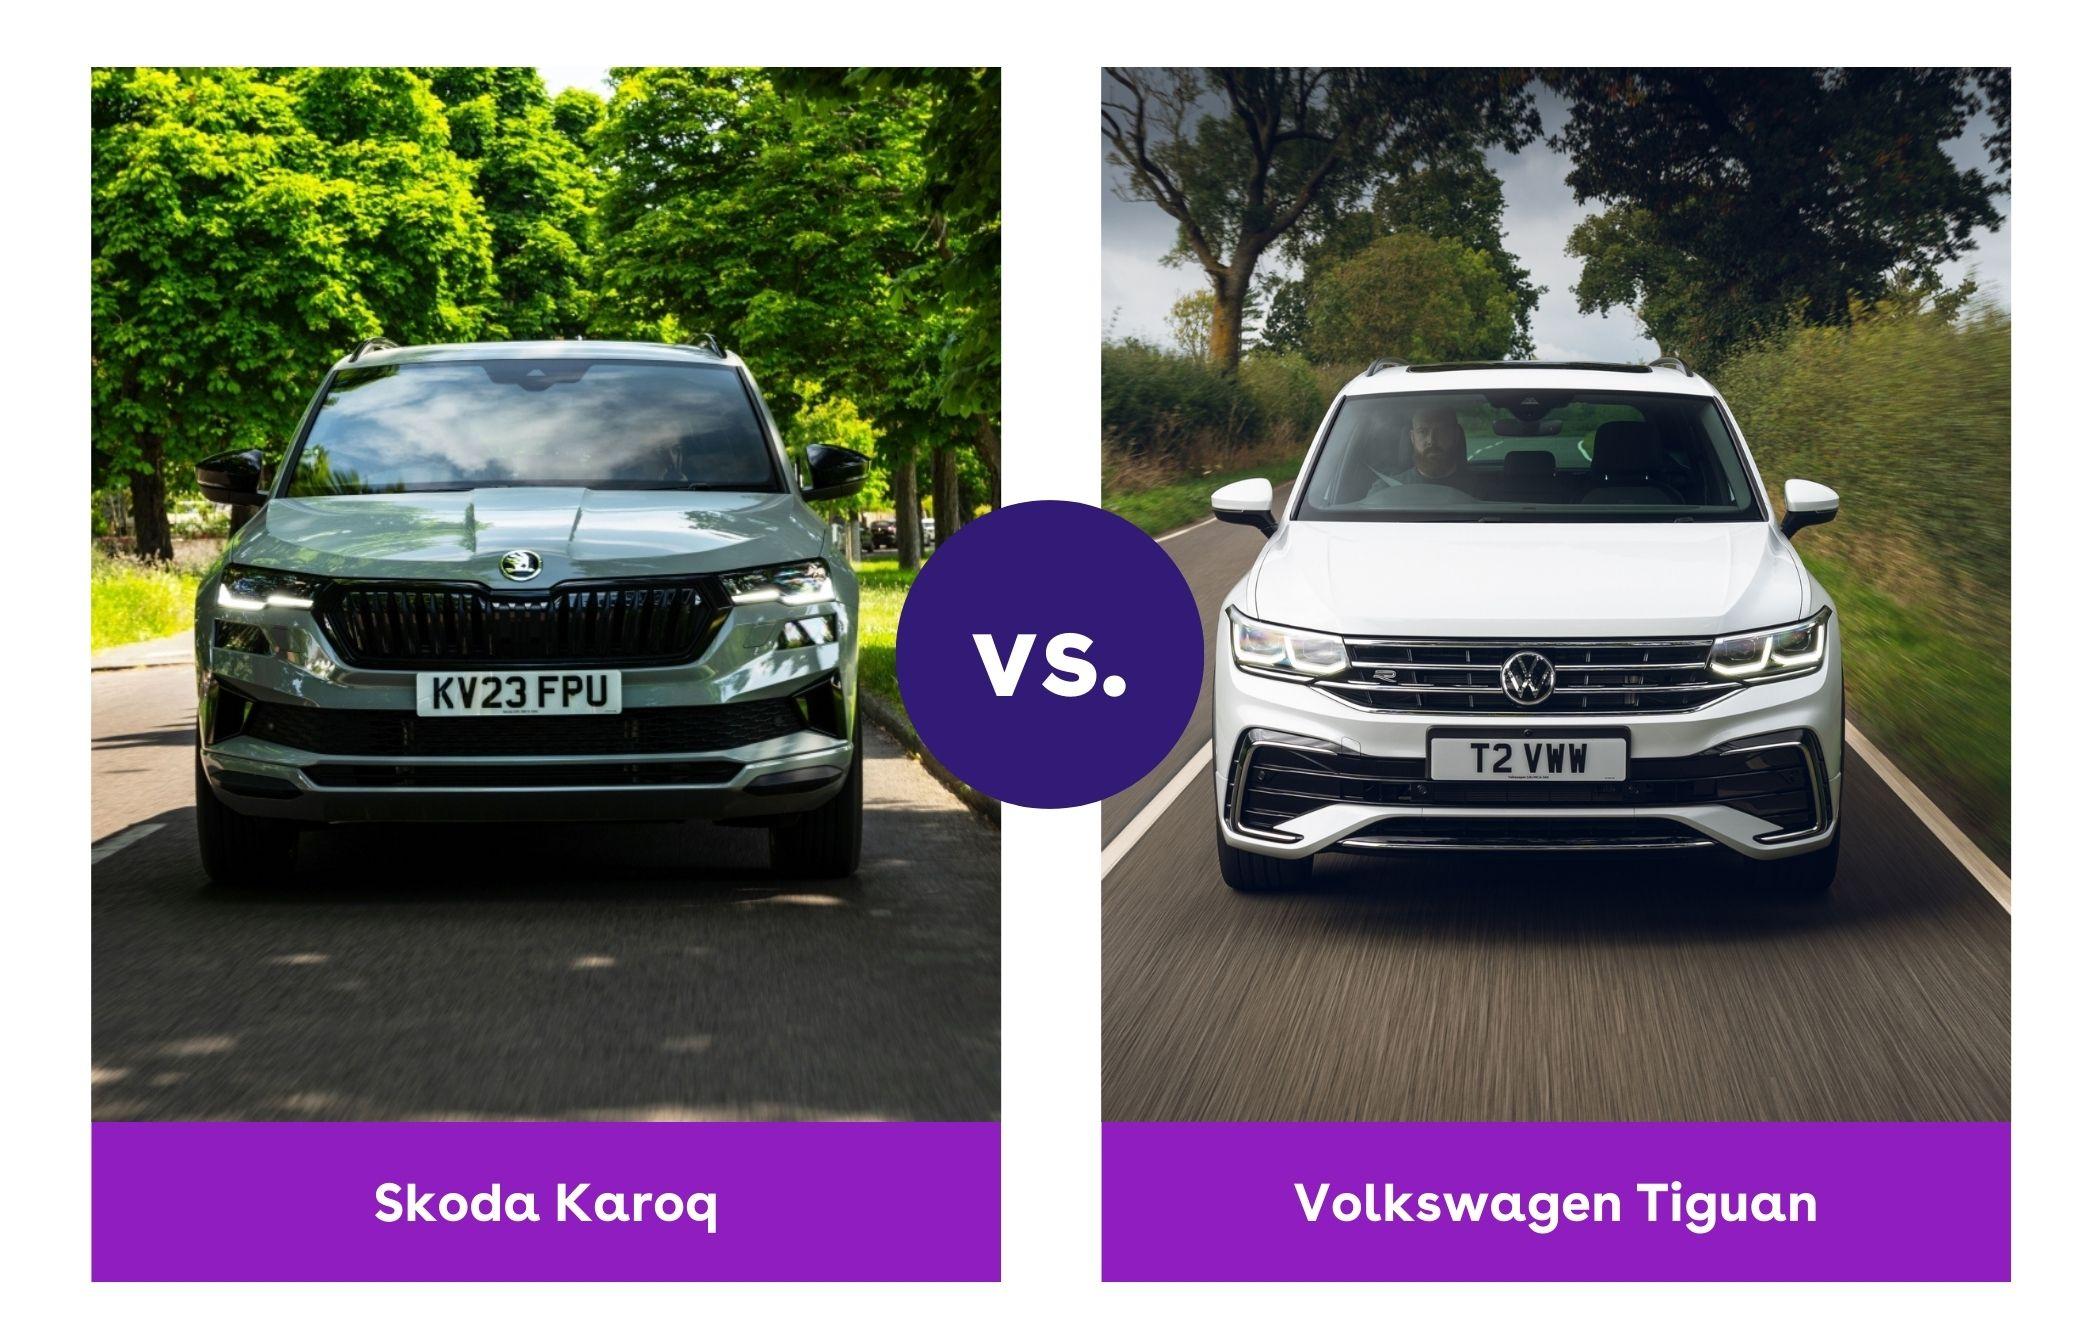 Side-by-side image of Skoda Karoq and Volkswagen Tiguan front